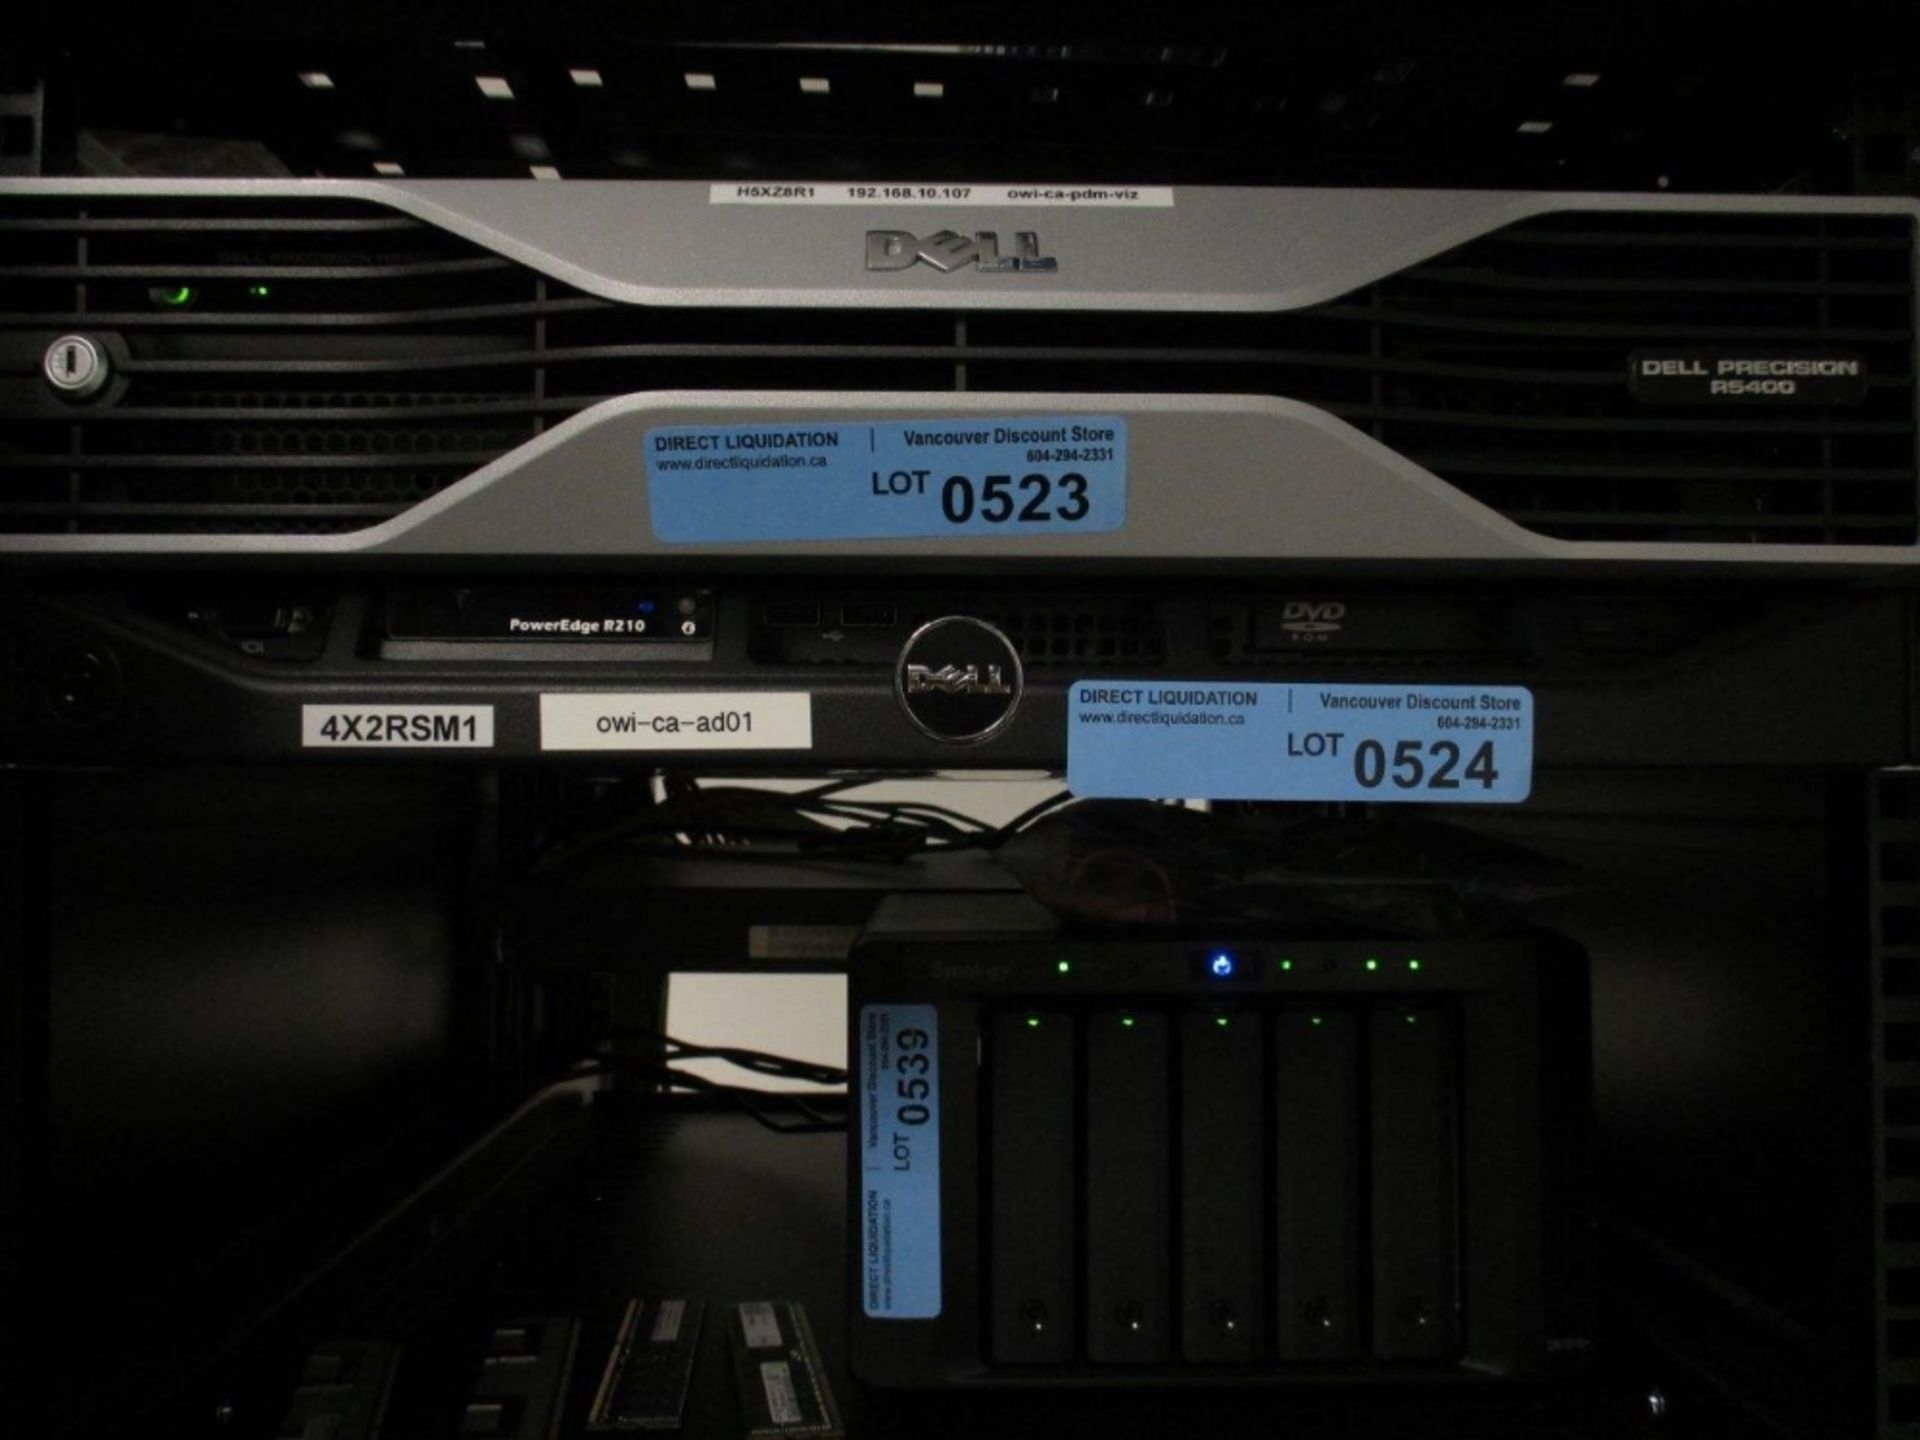 Dell PowerEdge R210 Xeon X3440 2.53 GHz, Quad Core, Intel 3420 - Hyper-Threading Technology, Intel